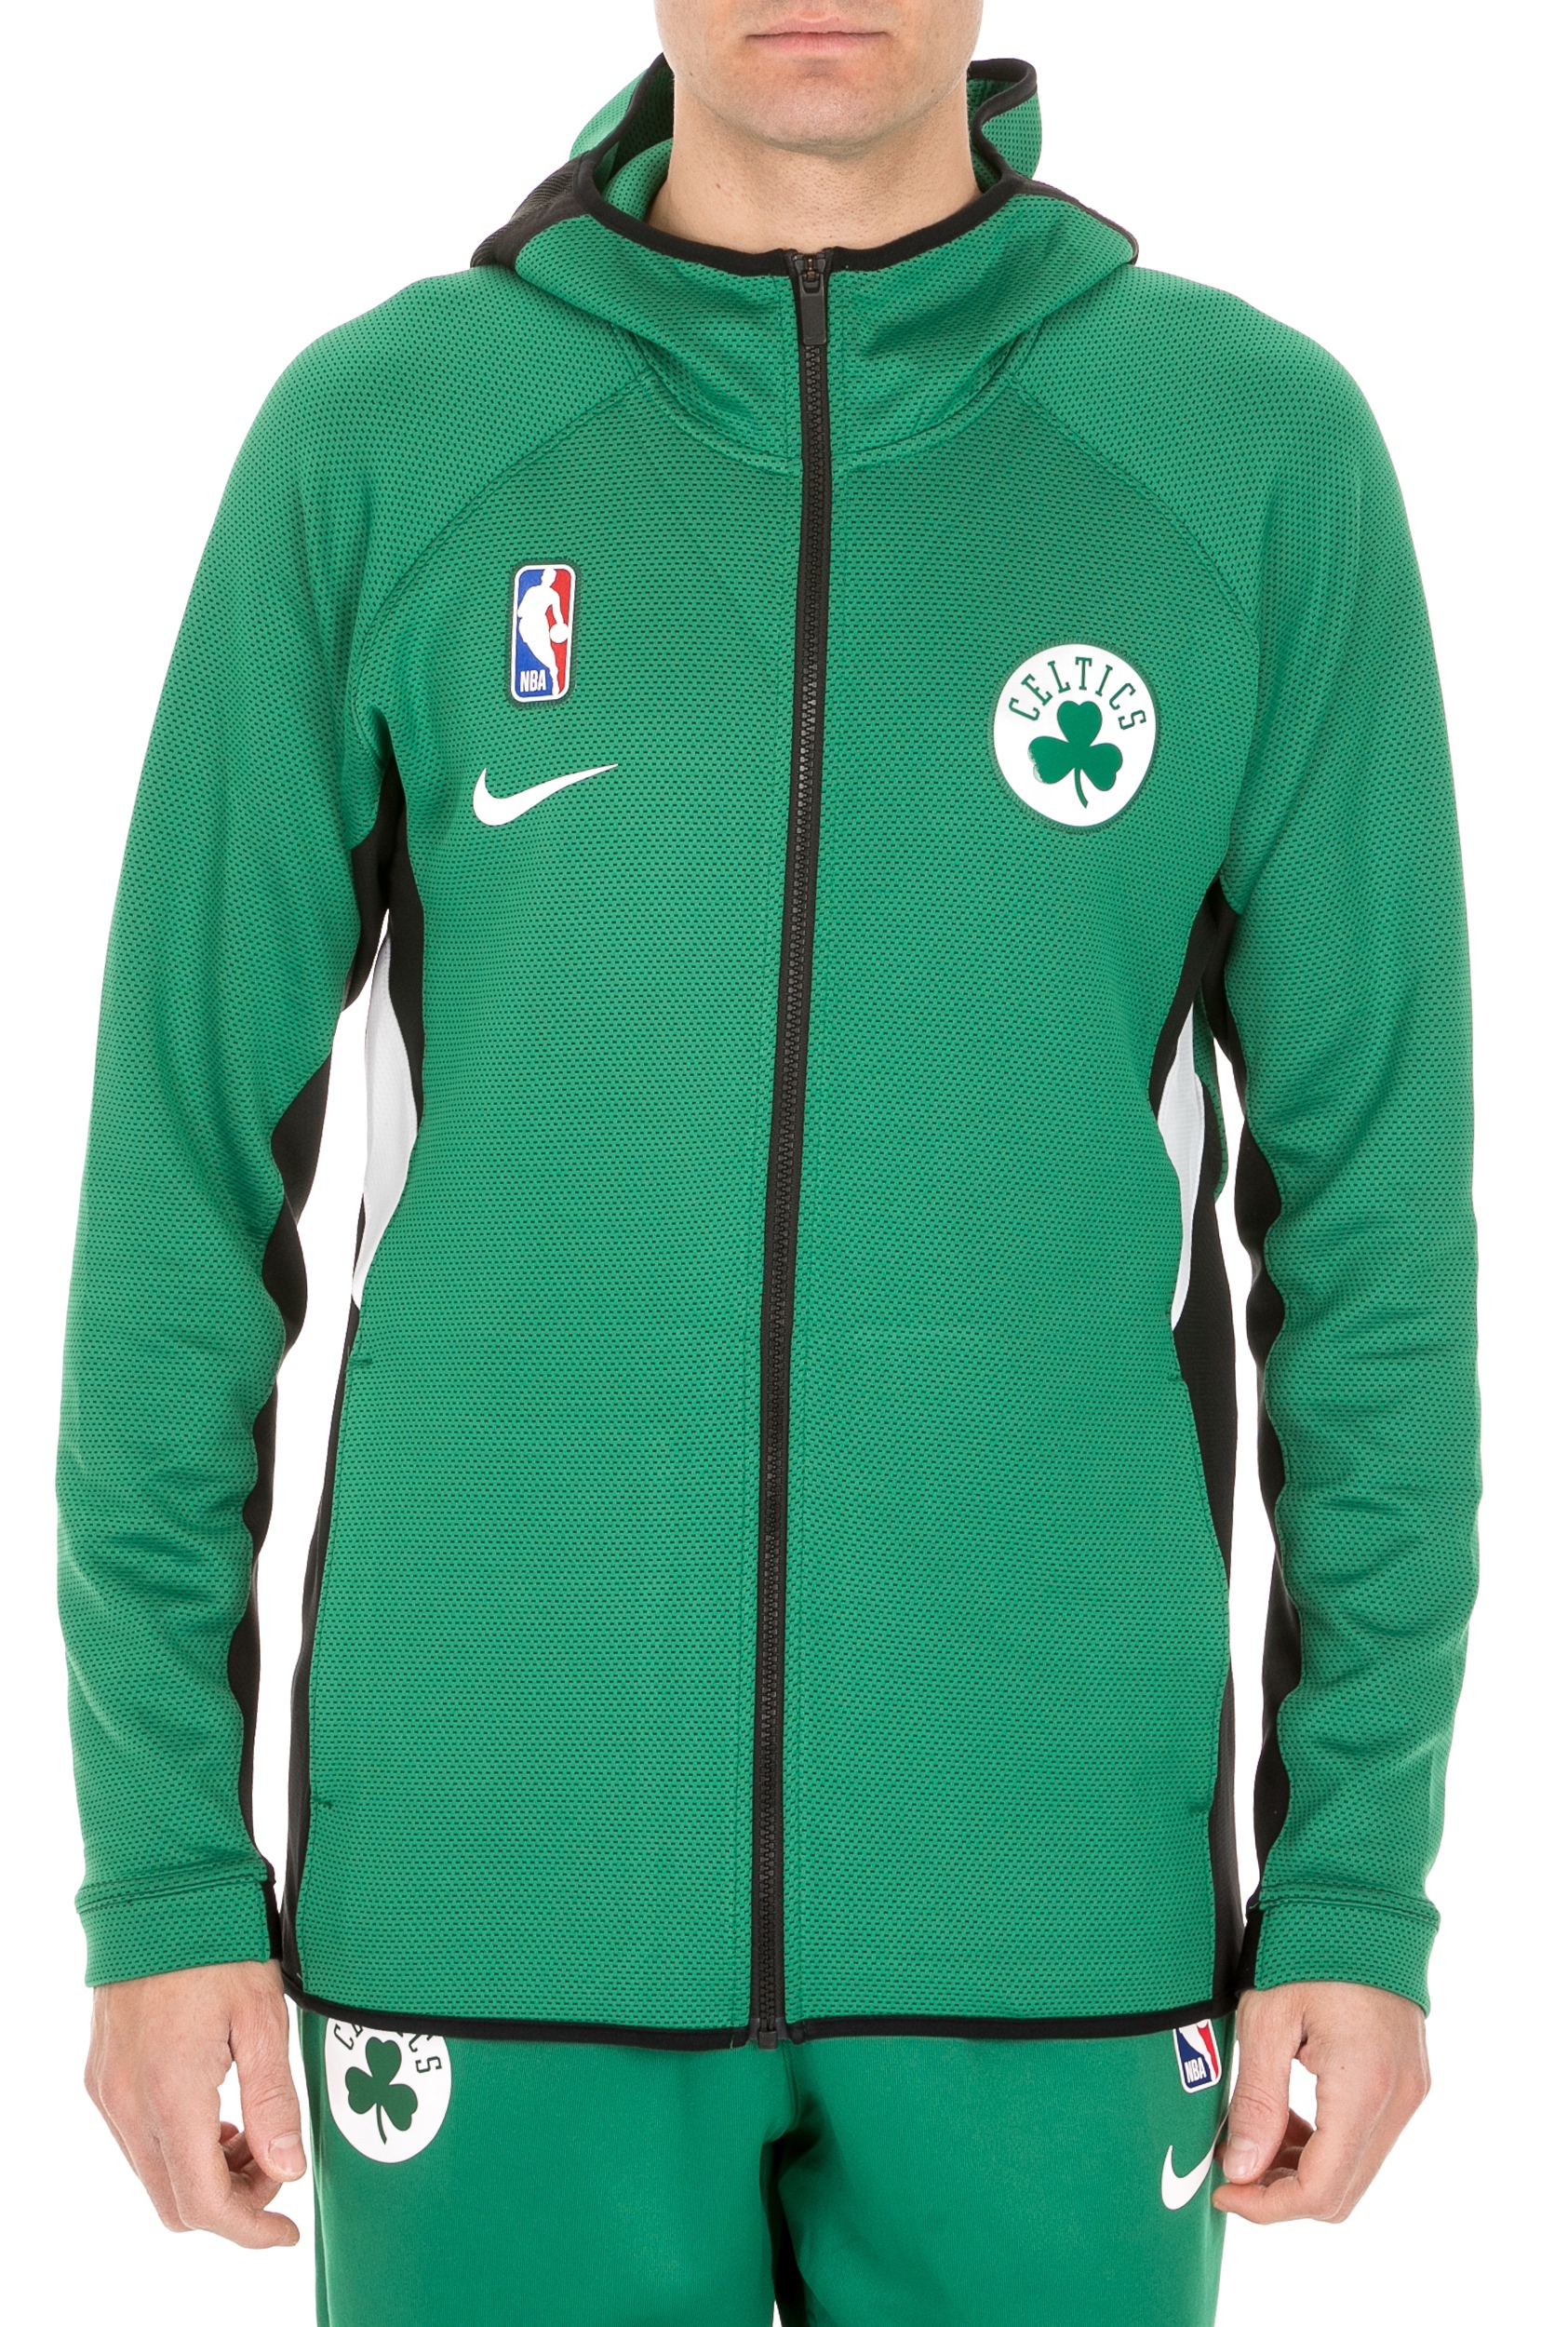 NIKE - Ανδρική ζακέτα NIKE Boston Celtics πράσινη